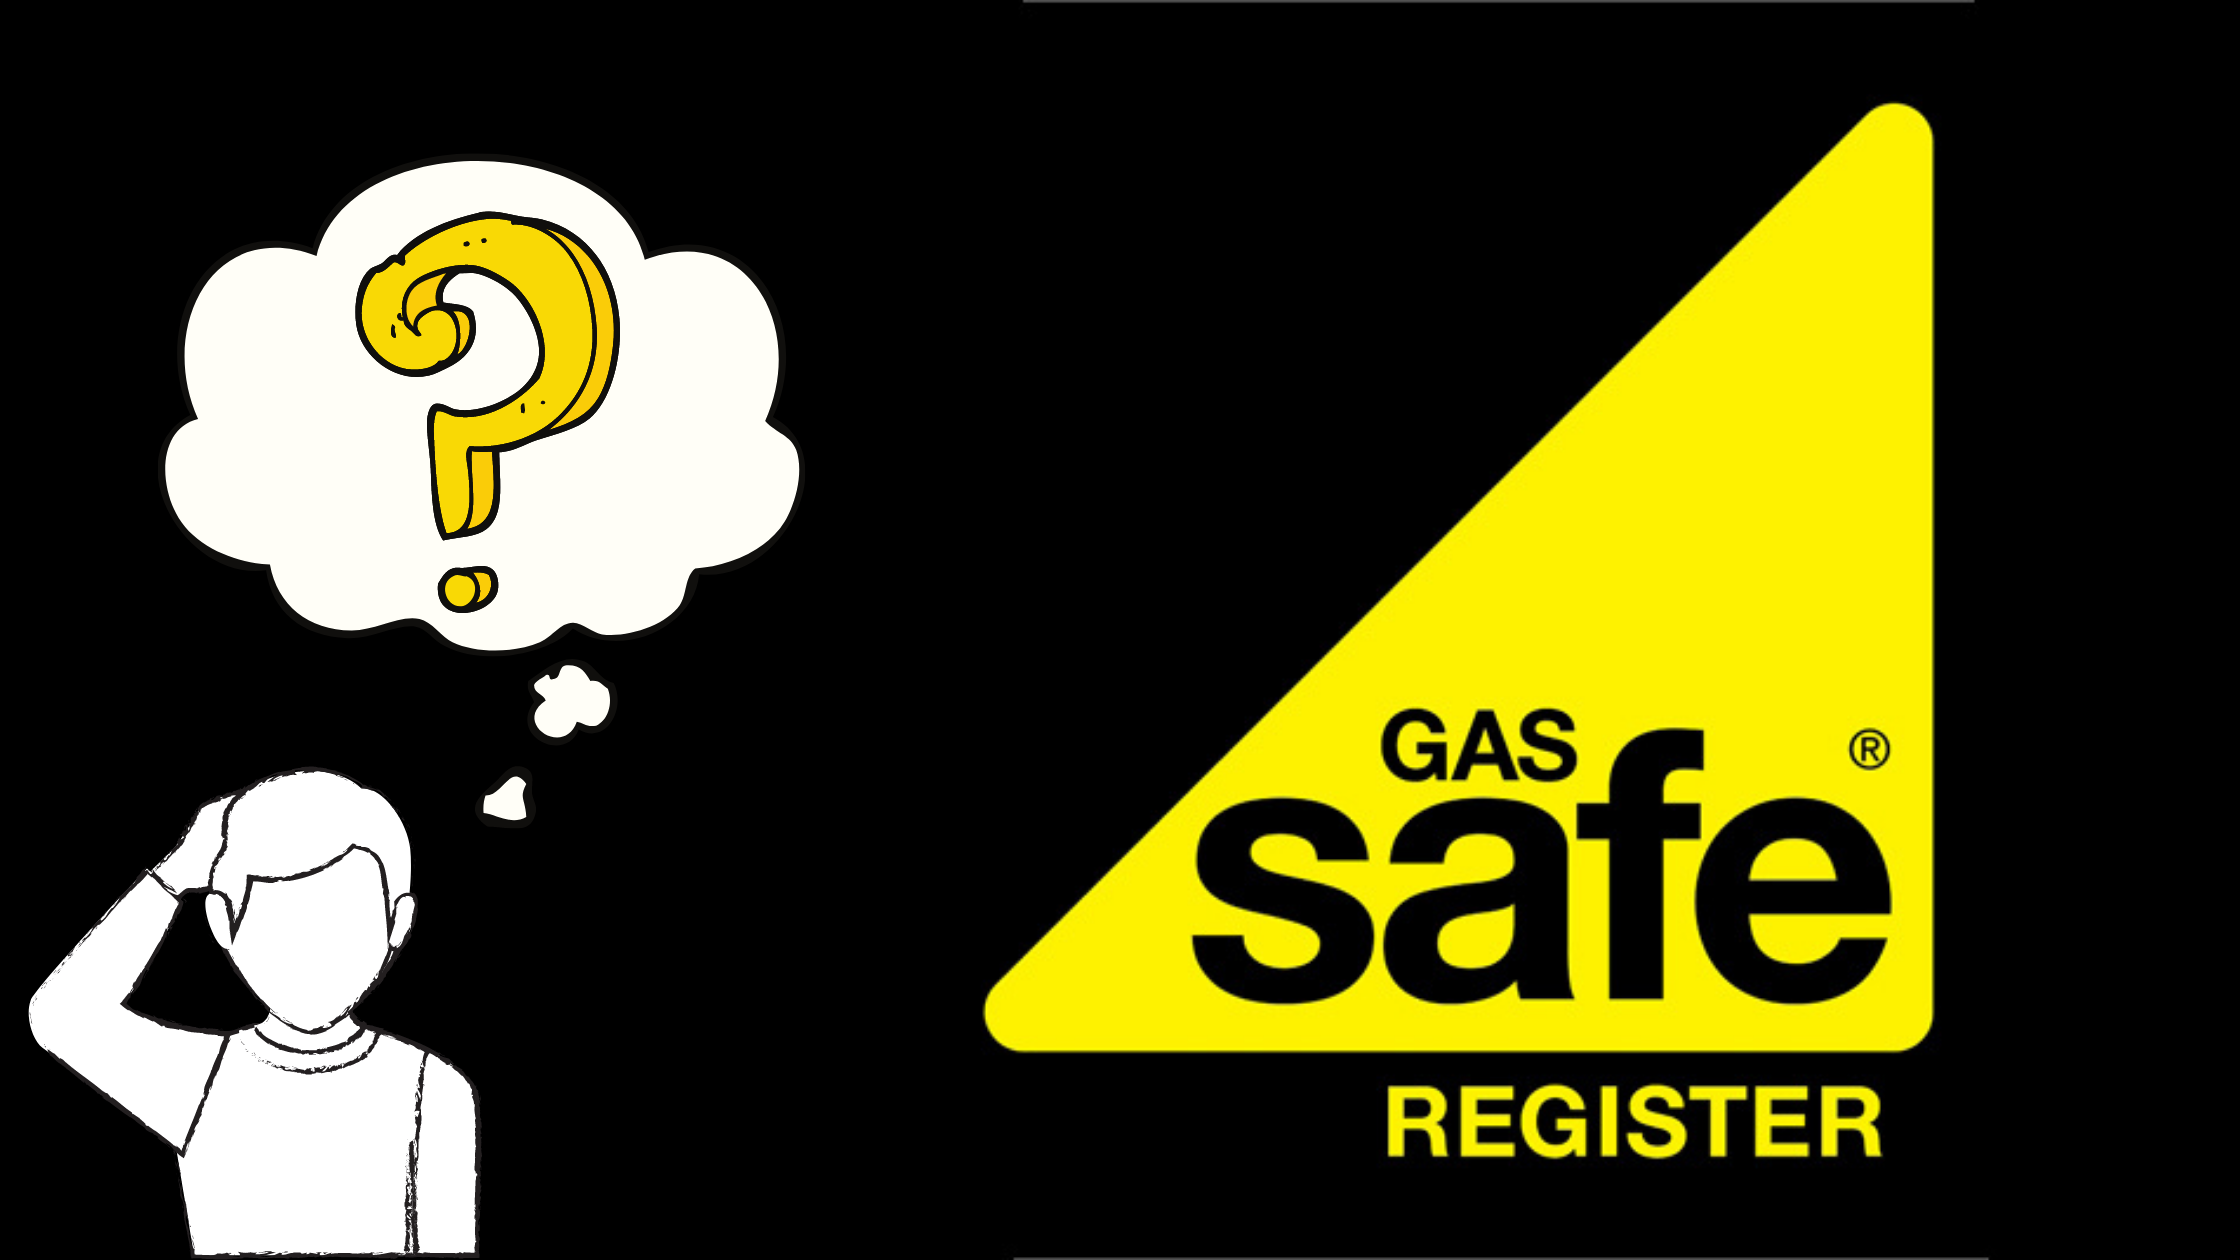 Boiler Not Registered With Gas Safe